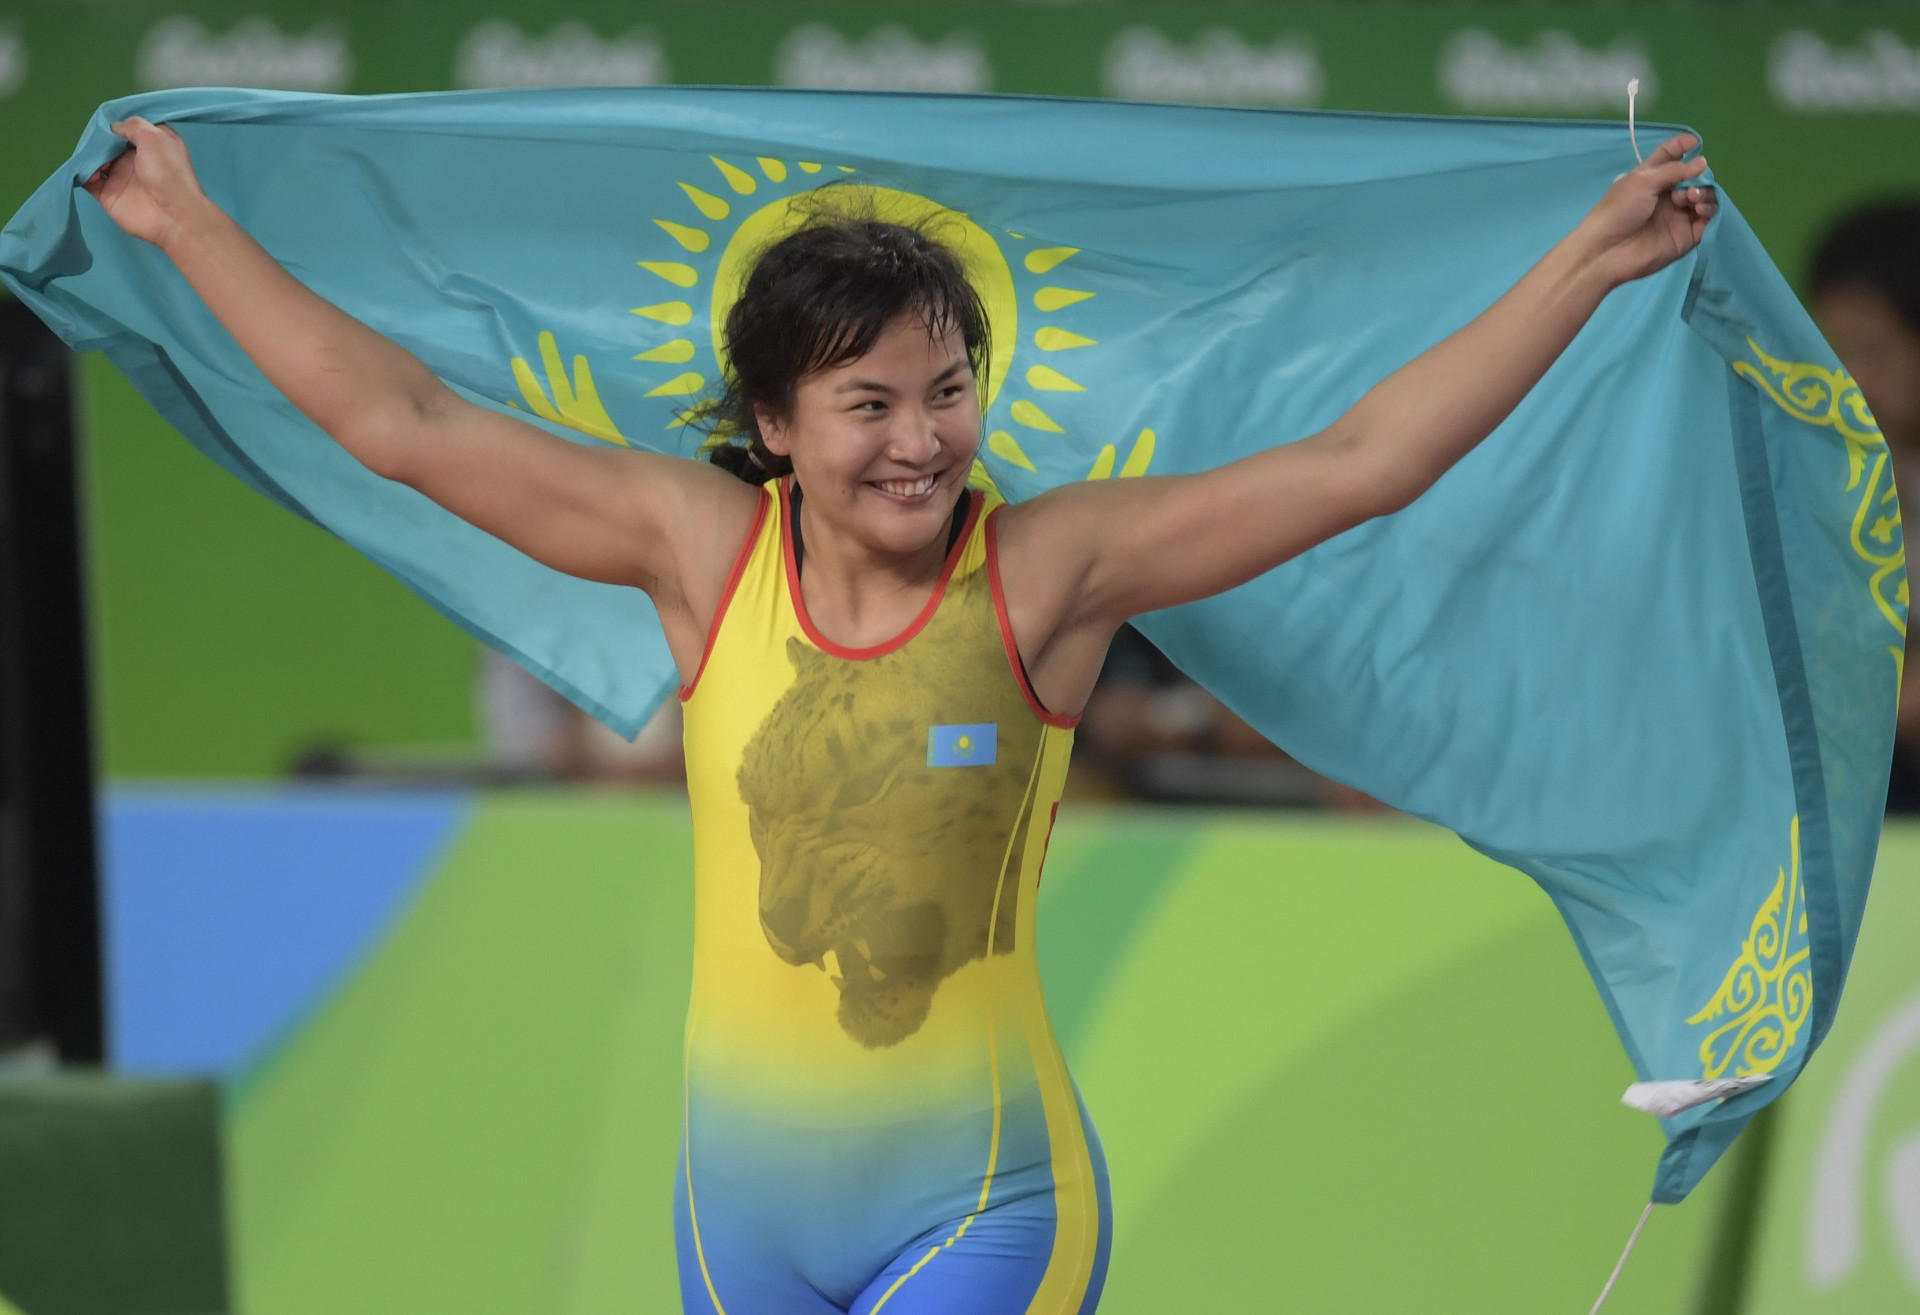 Elmira Syzdykova won the bronze medal at wrestling tournament in Russia